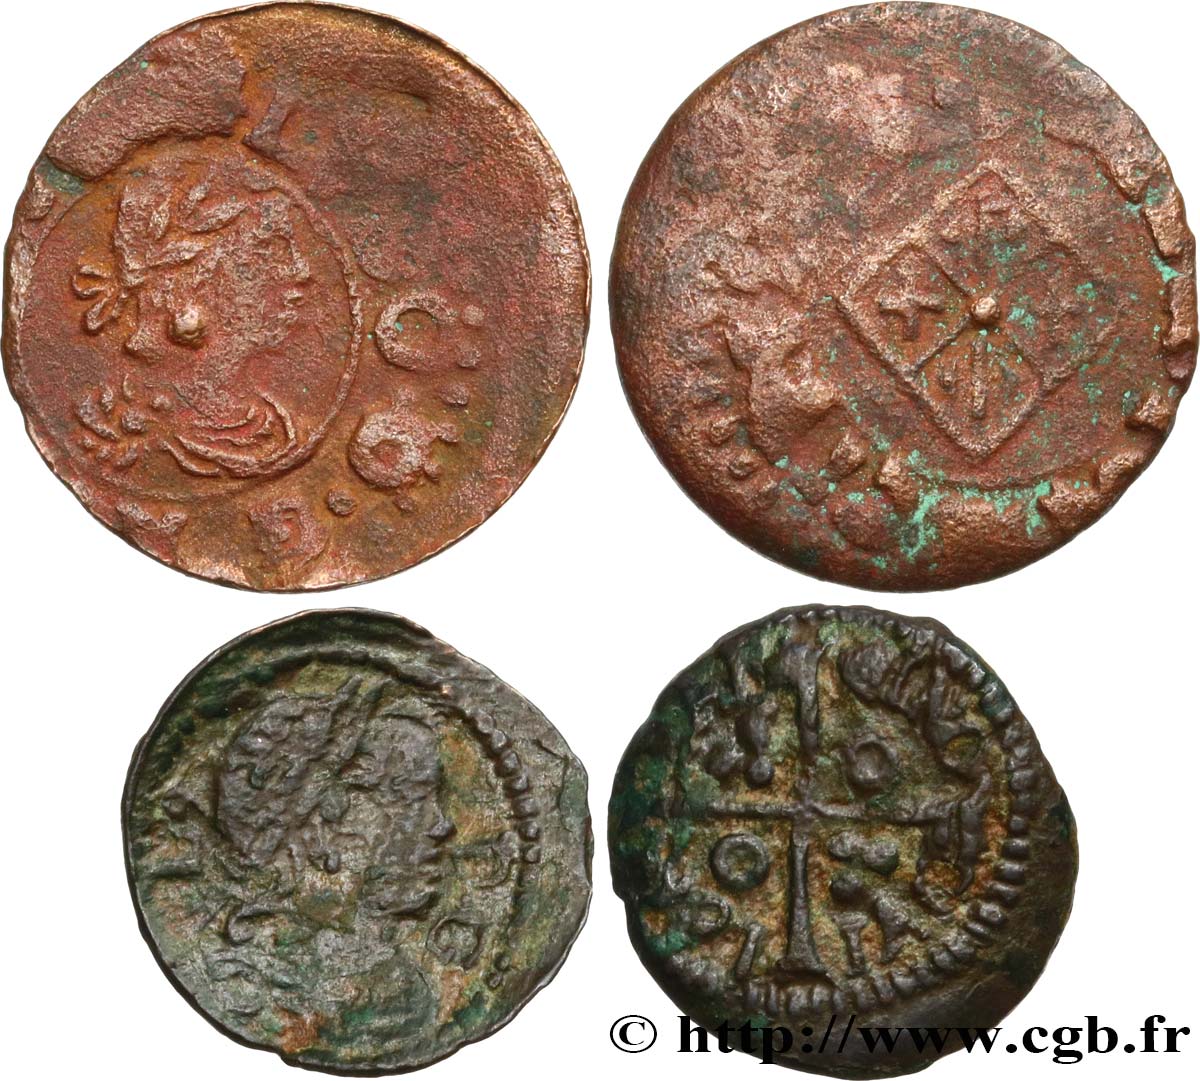 SPANIA - PRINCIPALITY OF CATALONIA - LOUIS XIII Lot de 2 monnaies royales n.d. Ateliers divers VF